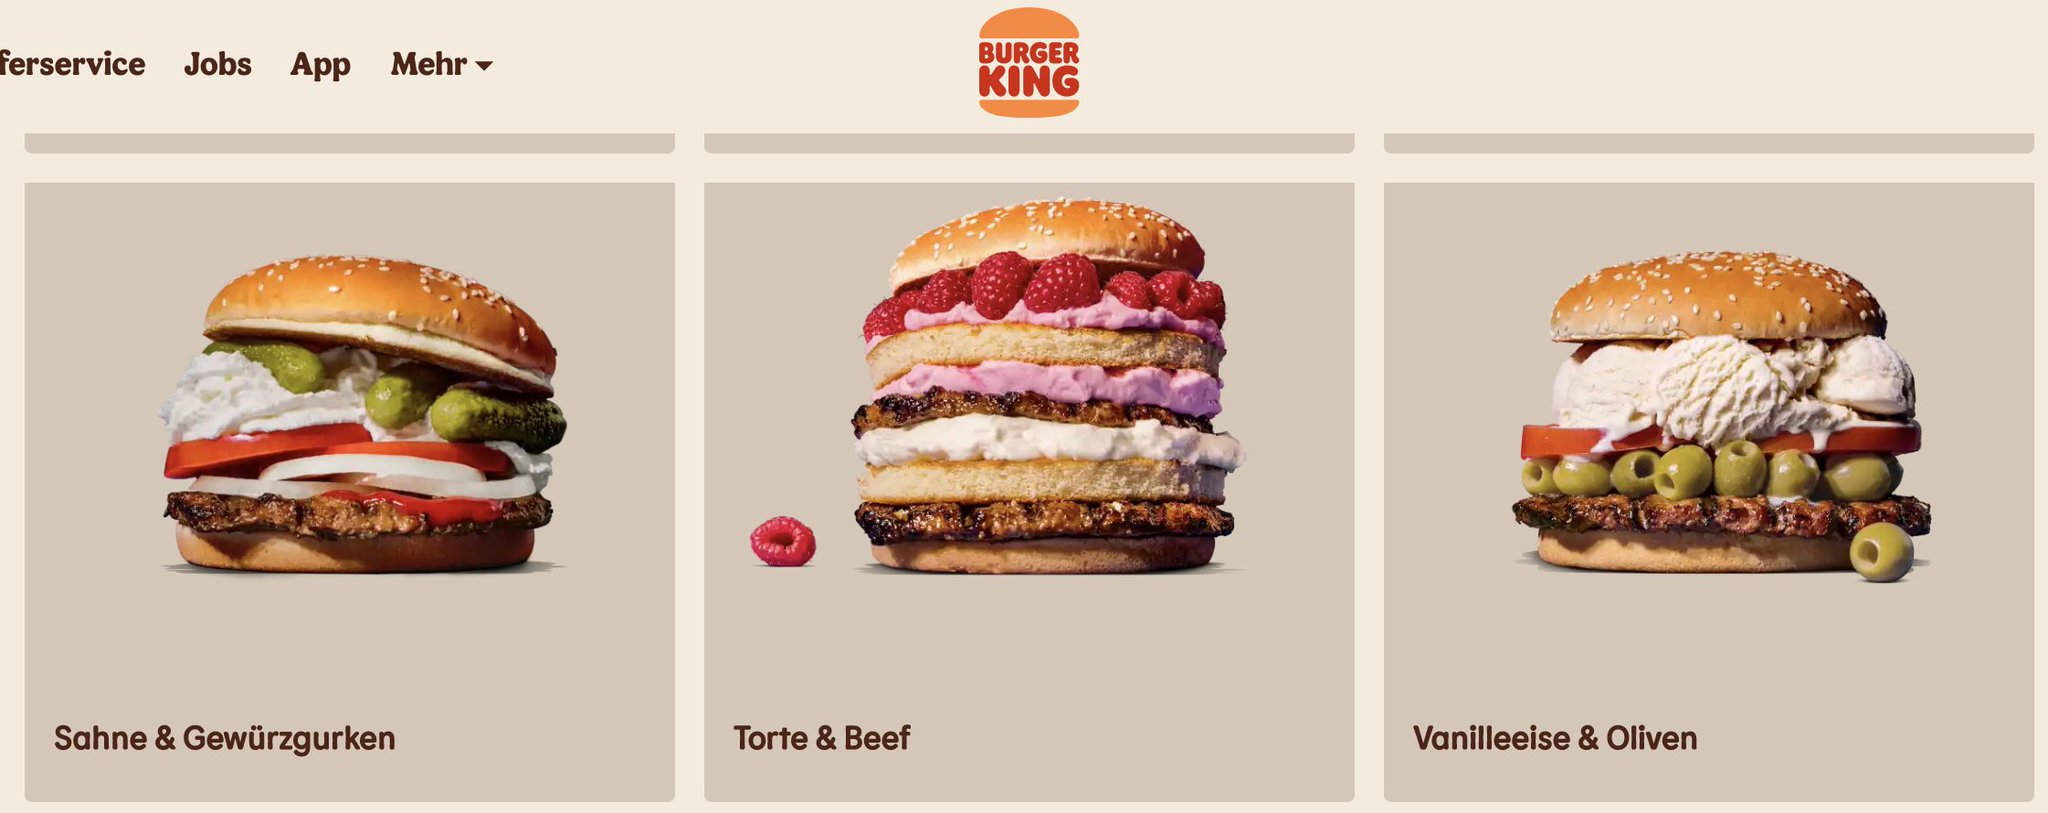 fake german whoppers - ferservice Jobs App Mehr Burger King ver Sahne & Gewrzgurken Torte & Beef Vanilleeise & Oliven